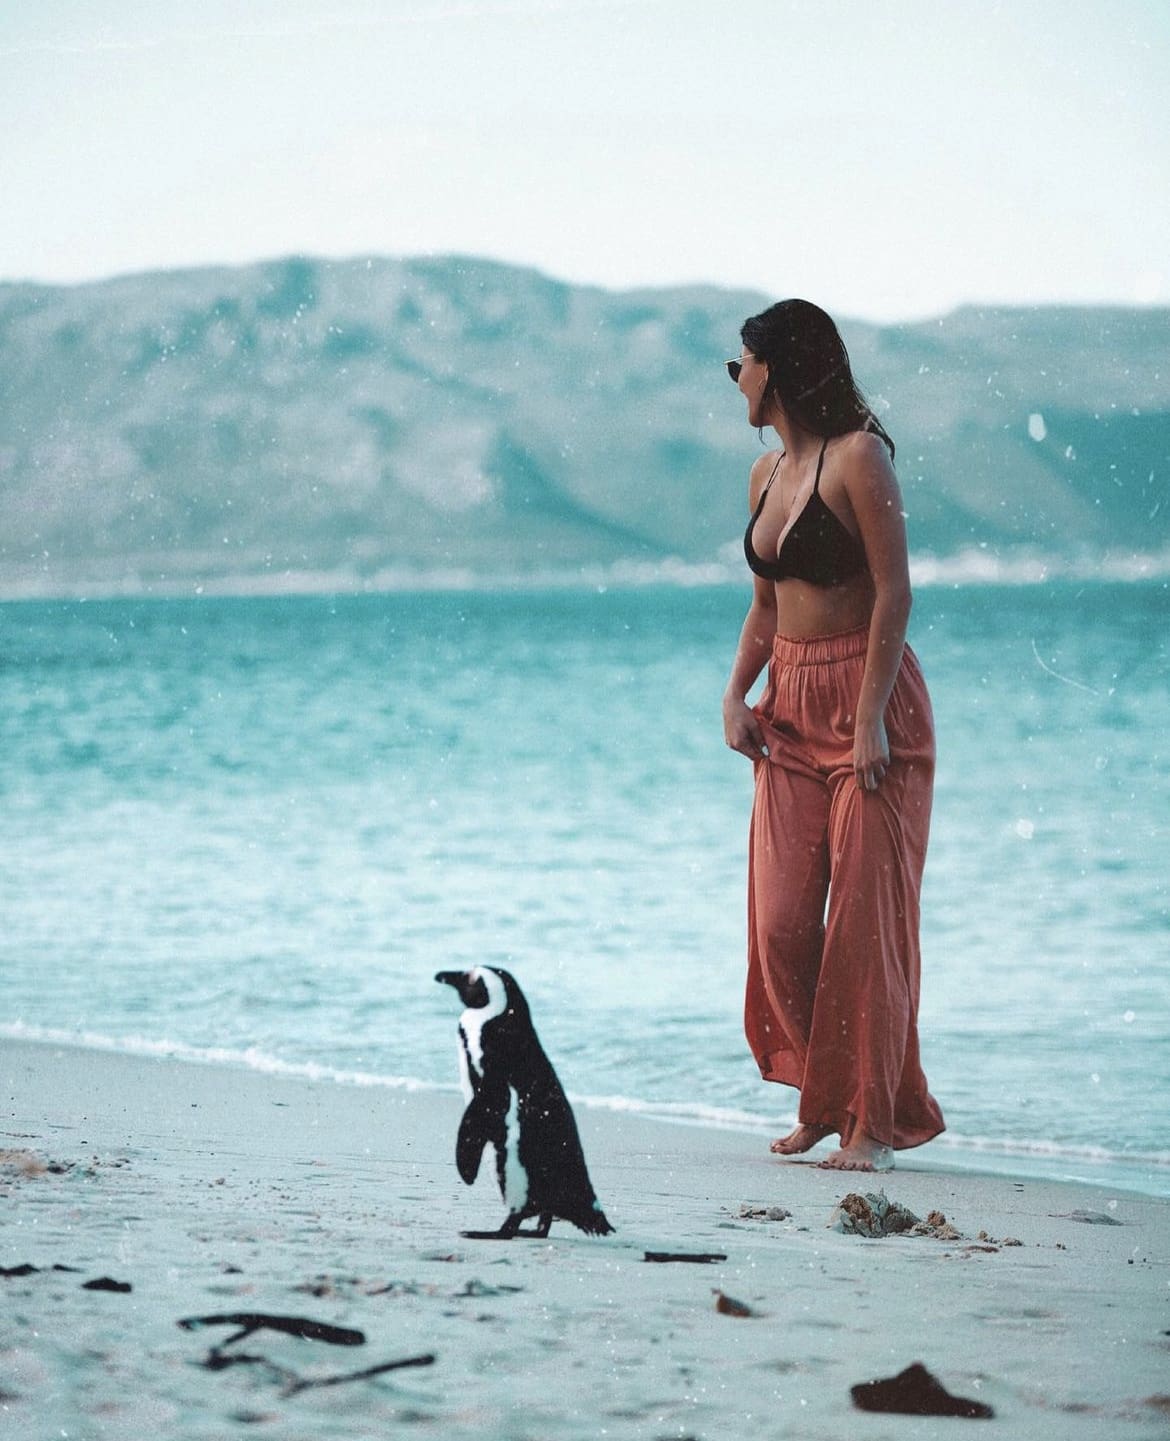 Meeting a penguin at Boulder's Beach